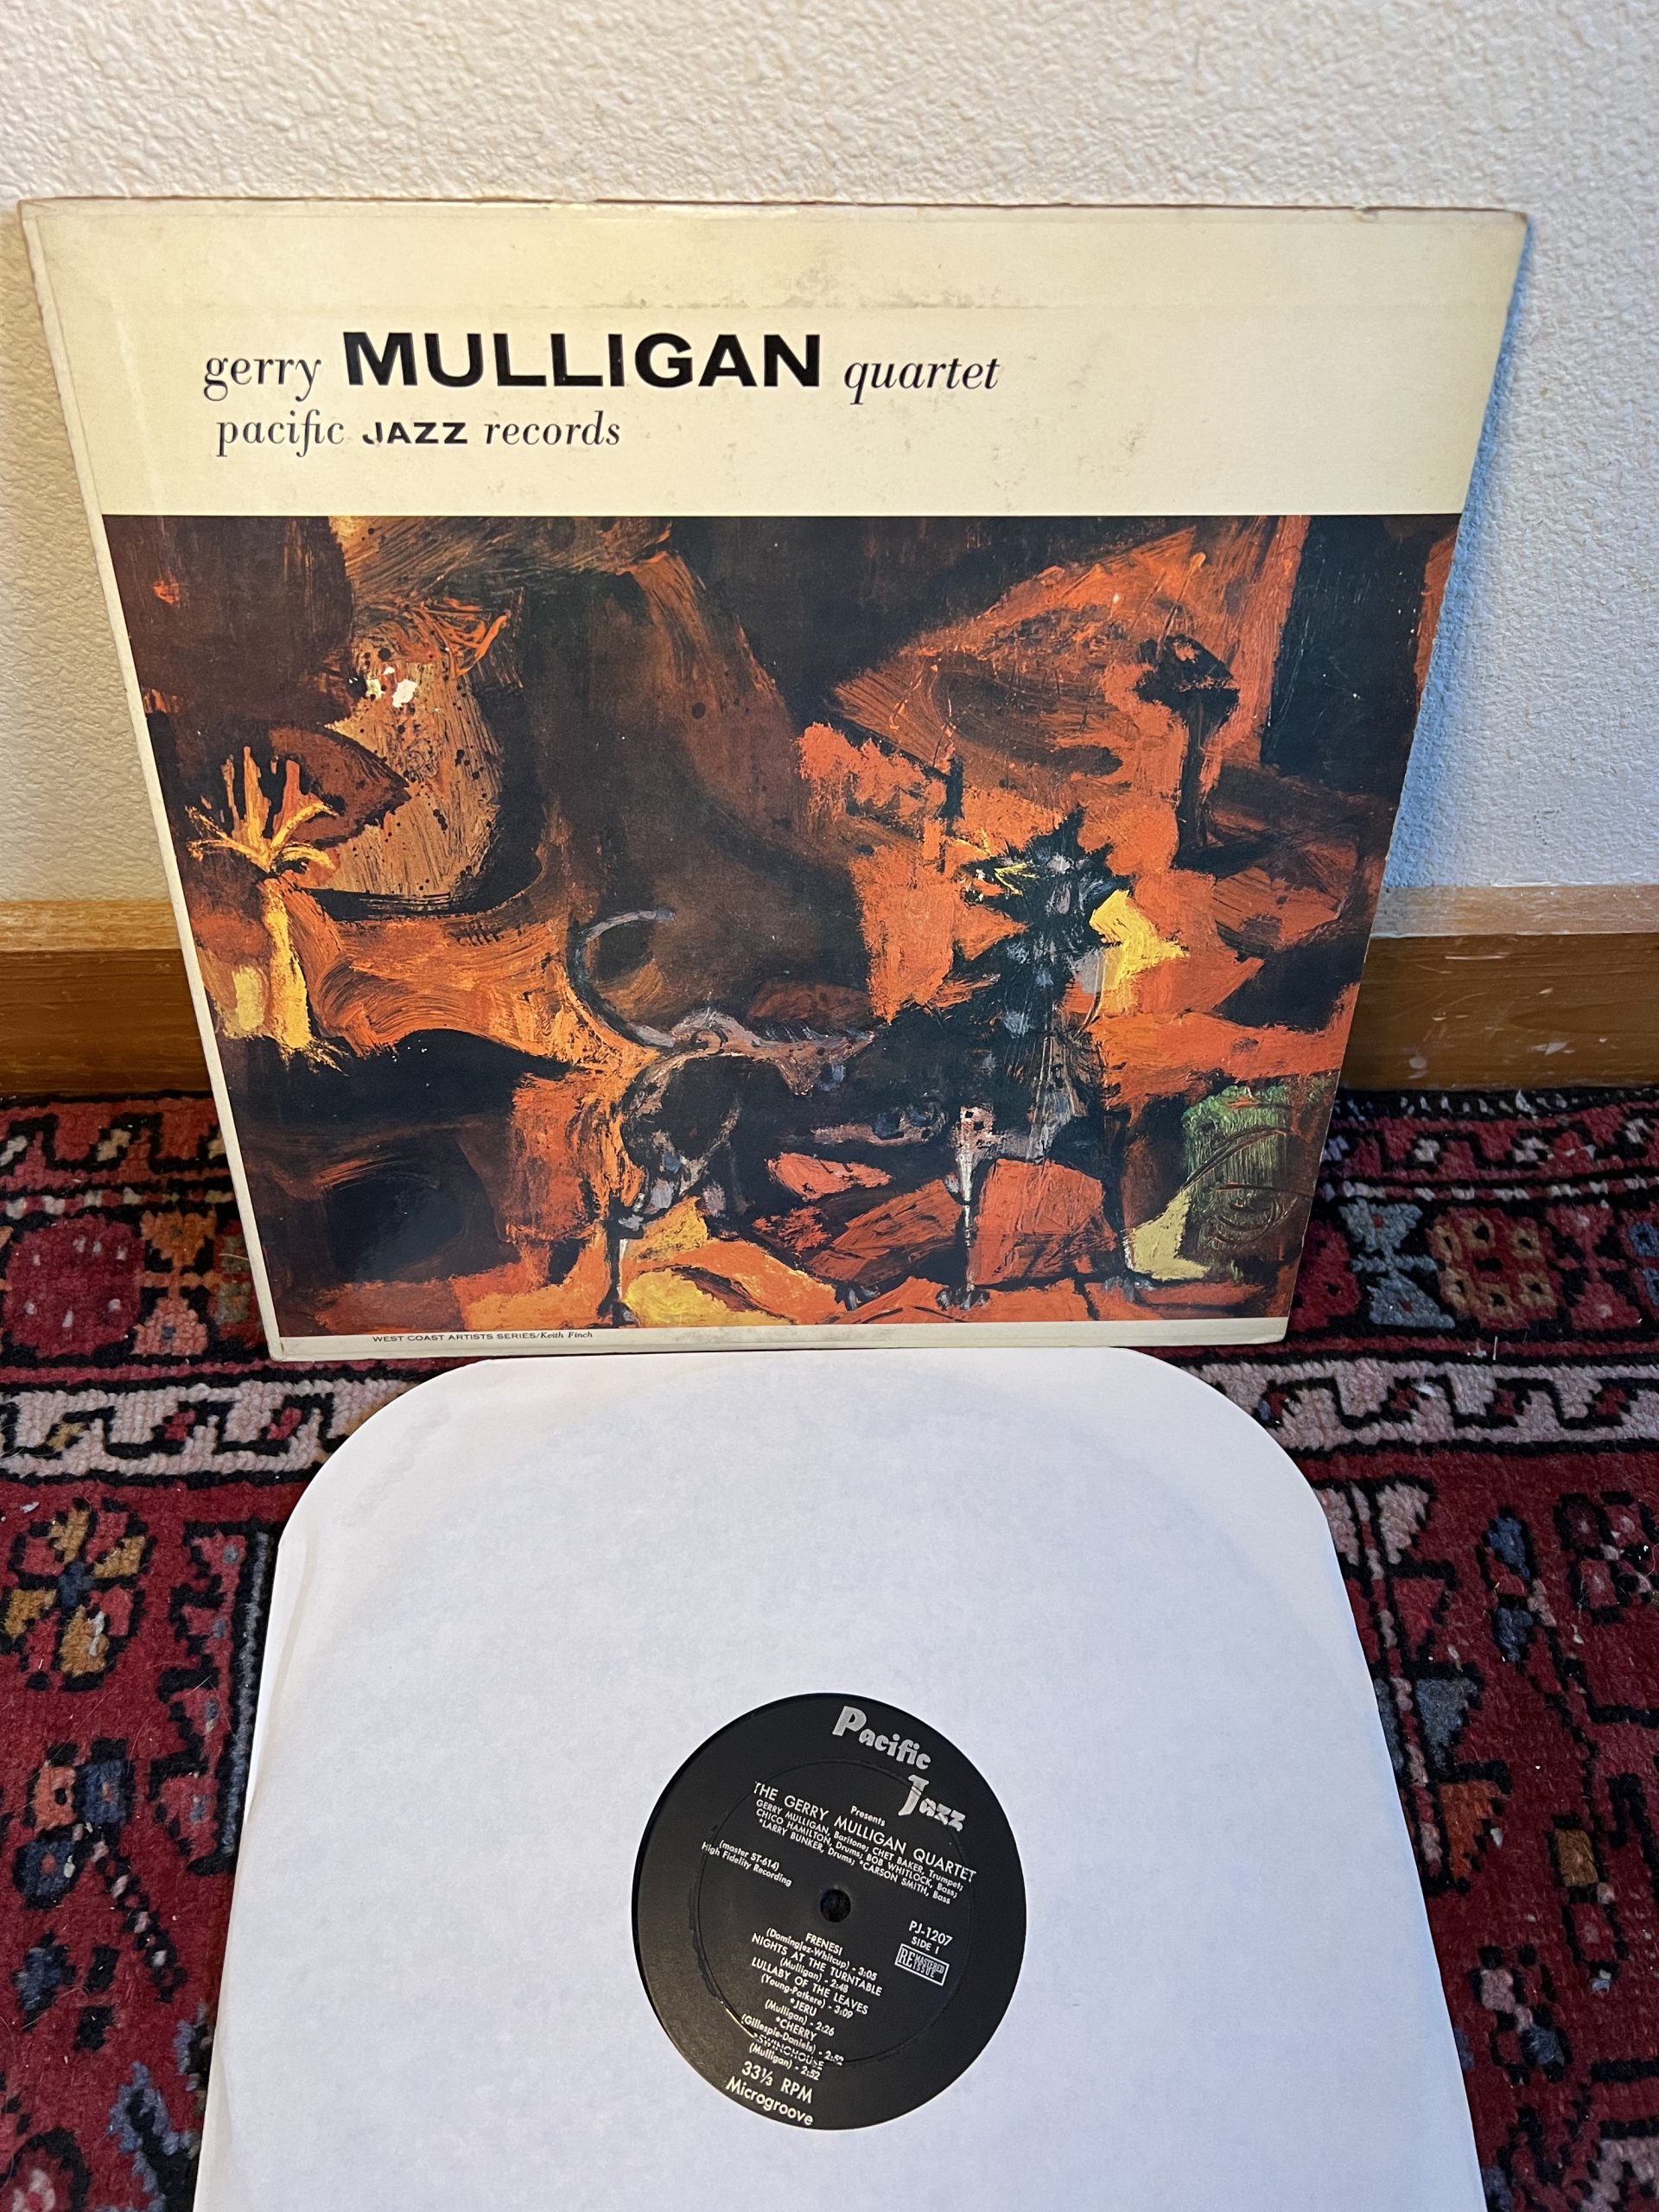 Gerry Mulligan Quartet featuring Chet Baker - LP NM 1957 Pacific Cool Jazz  PJ-1207 RCA Hollywood Pressing